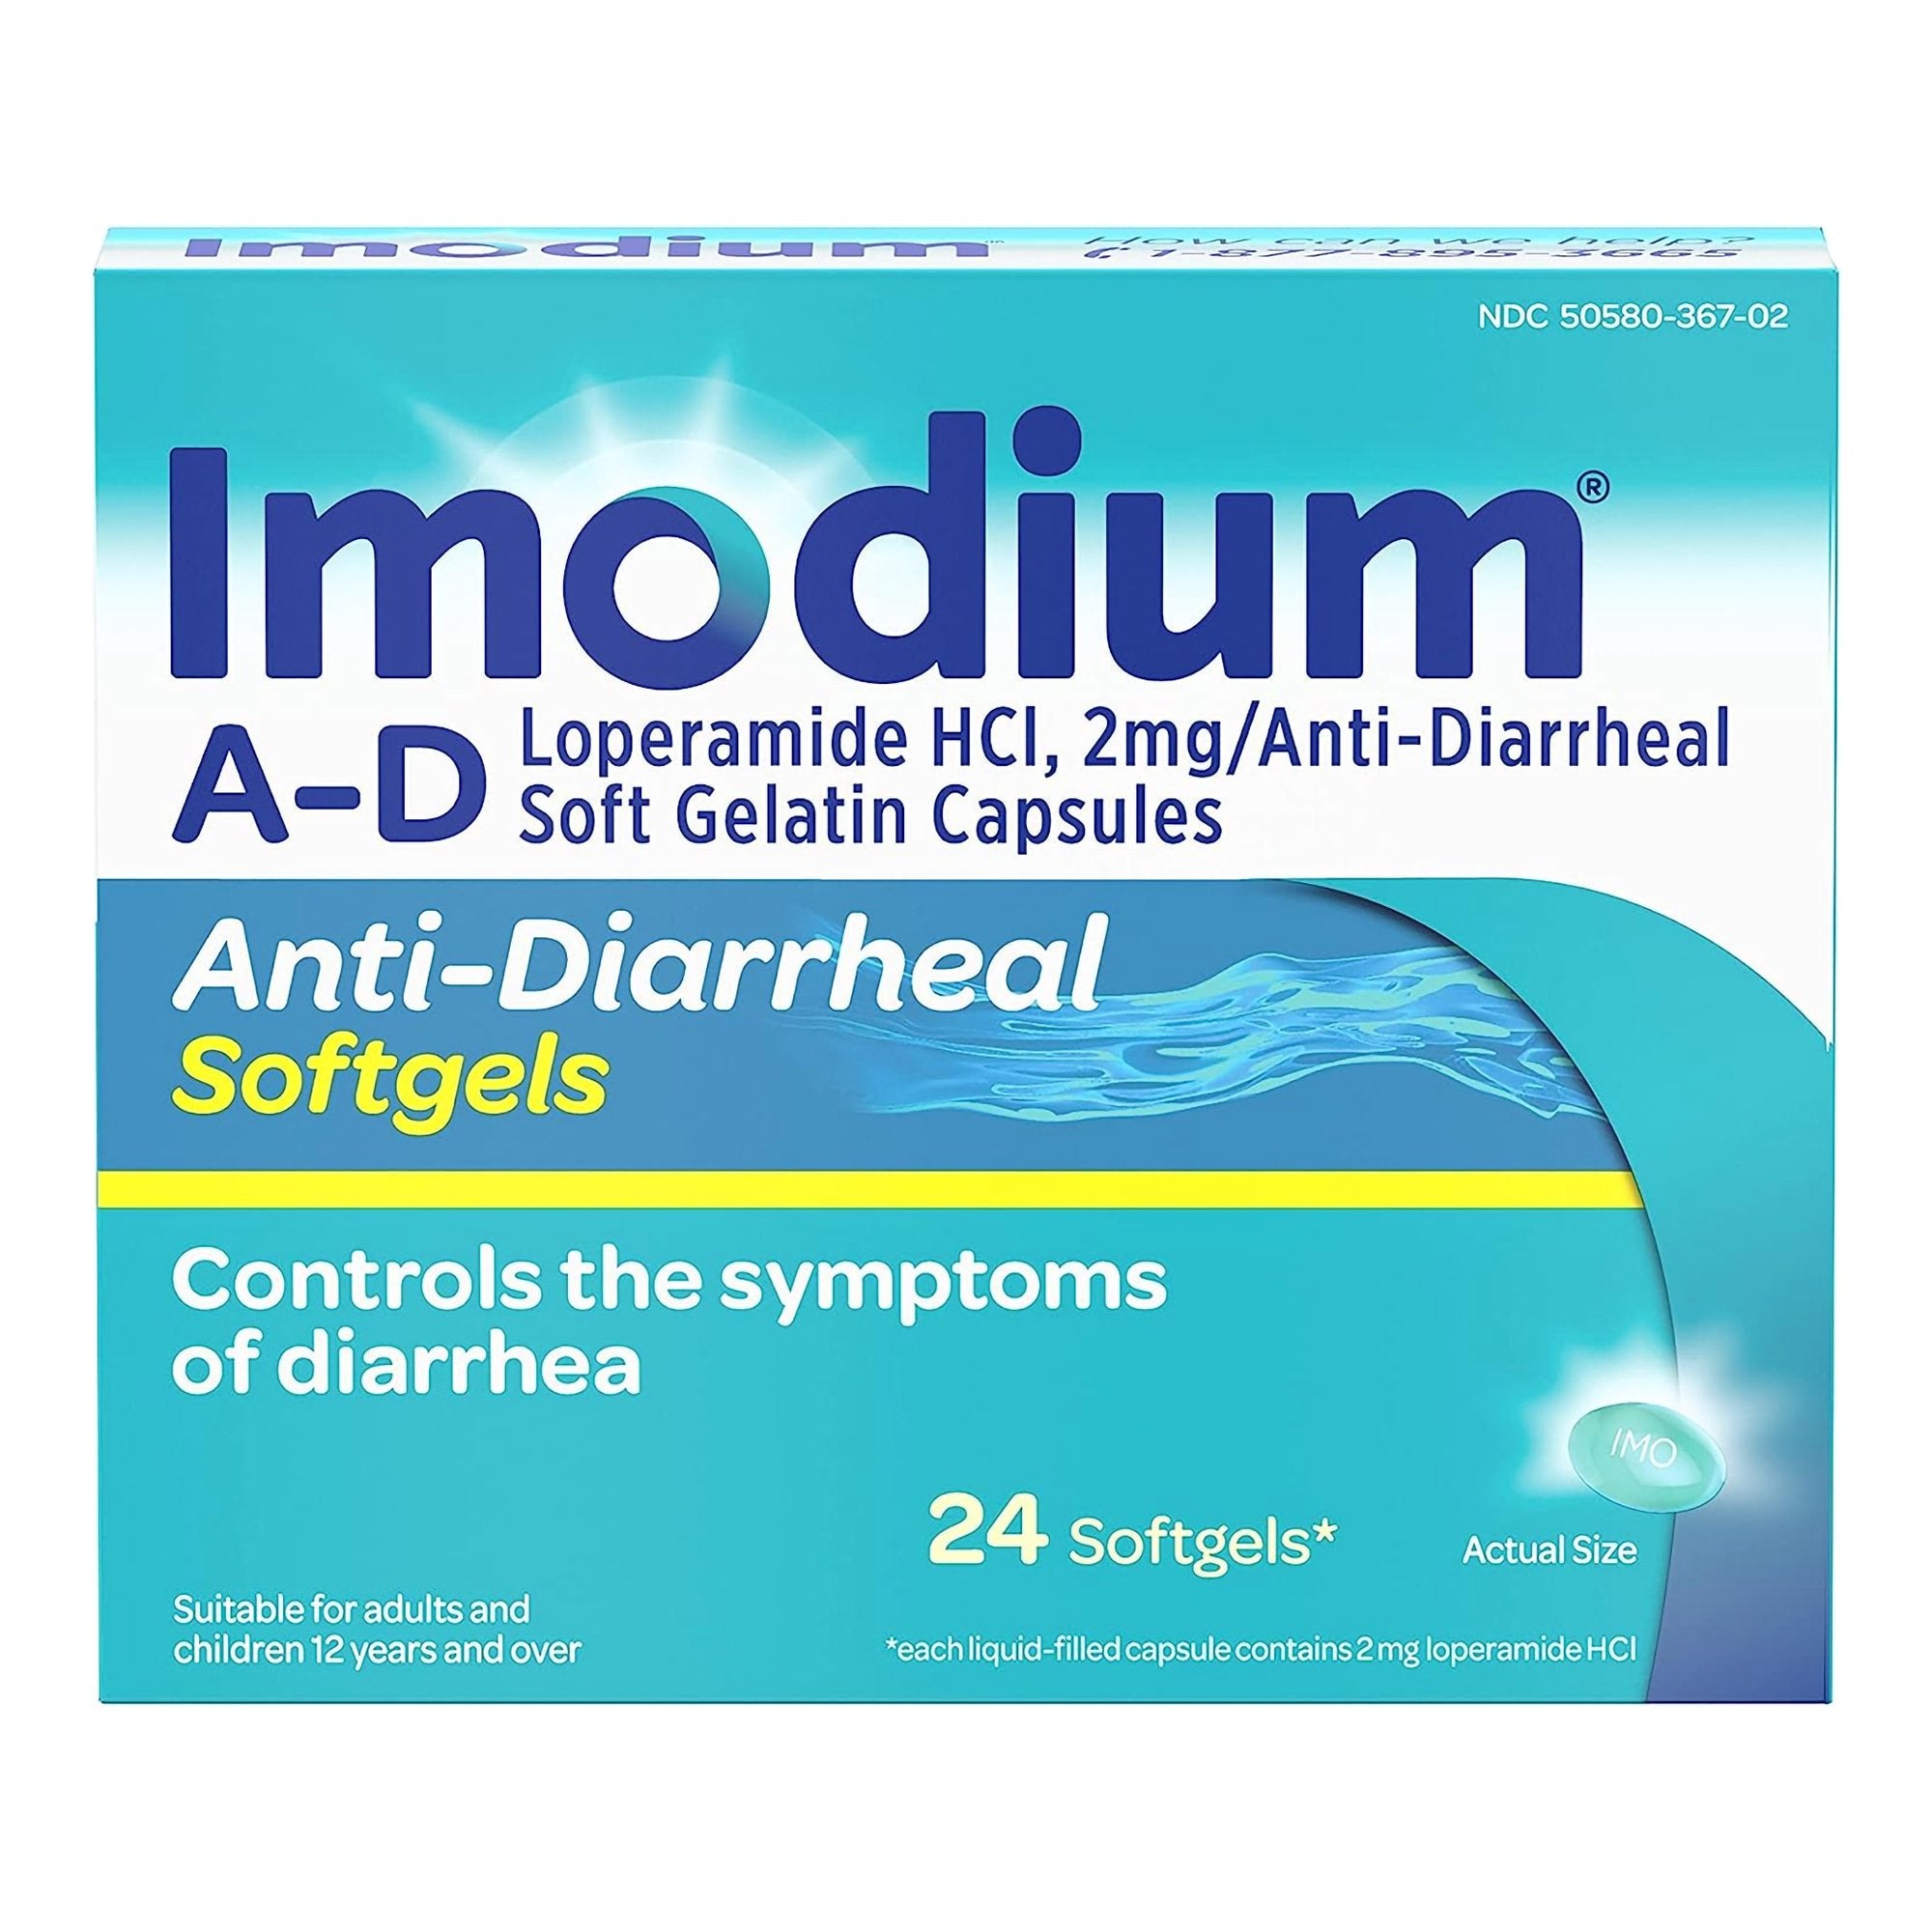 Anti-Diarrheal Imodium A-D 2 mg Strength Caplet 24 per Box